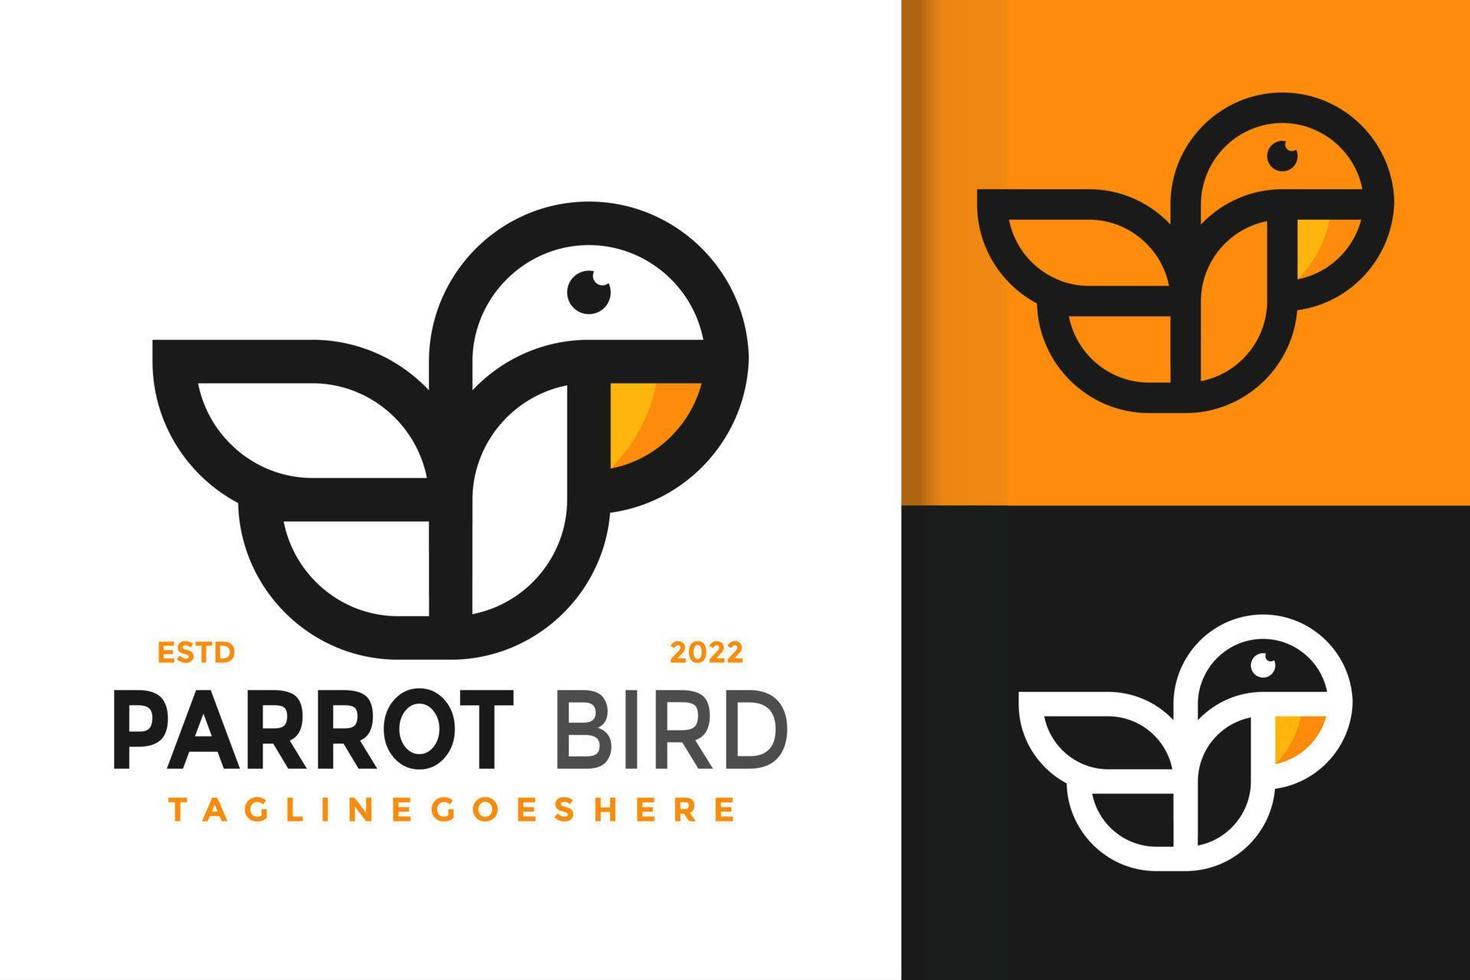 letra p design de logotipo de pássaro papagaio, vetor de logotipos de identidade de marca, logotipo moderno, modelo de ilustração vetorial de designs de logotipo